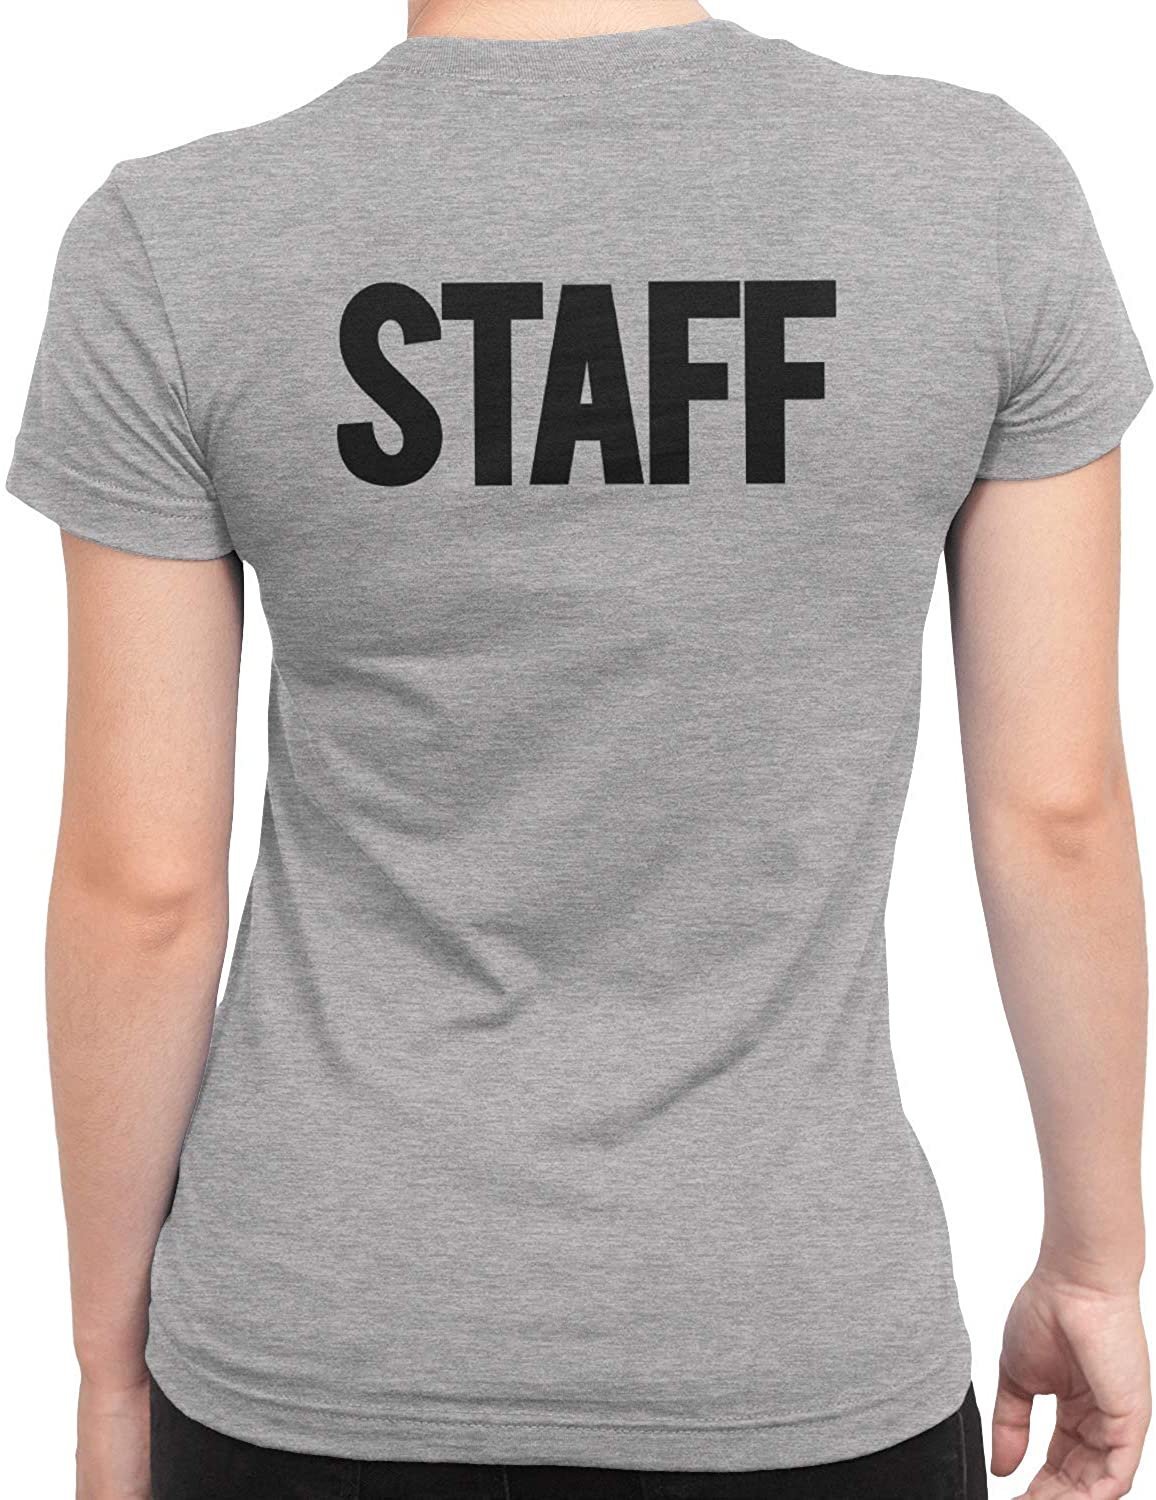 Staff Ladies Short Sleeve T-Shirt (Solid Design, Heather Gray)